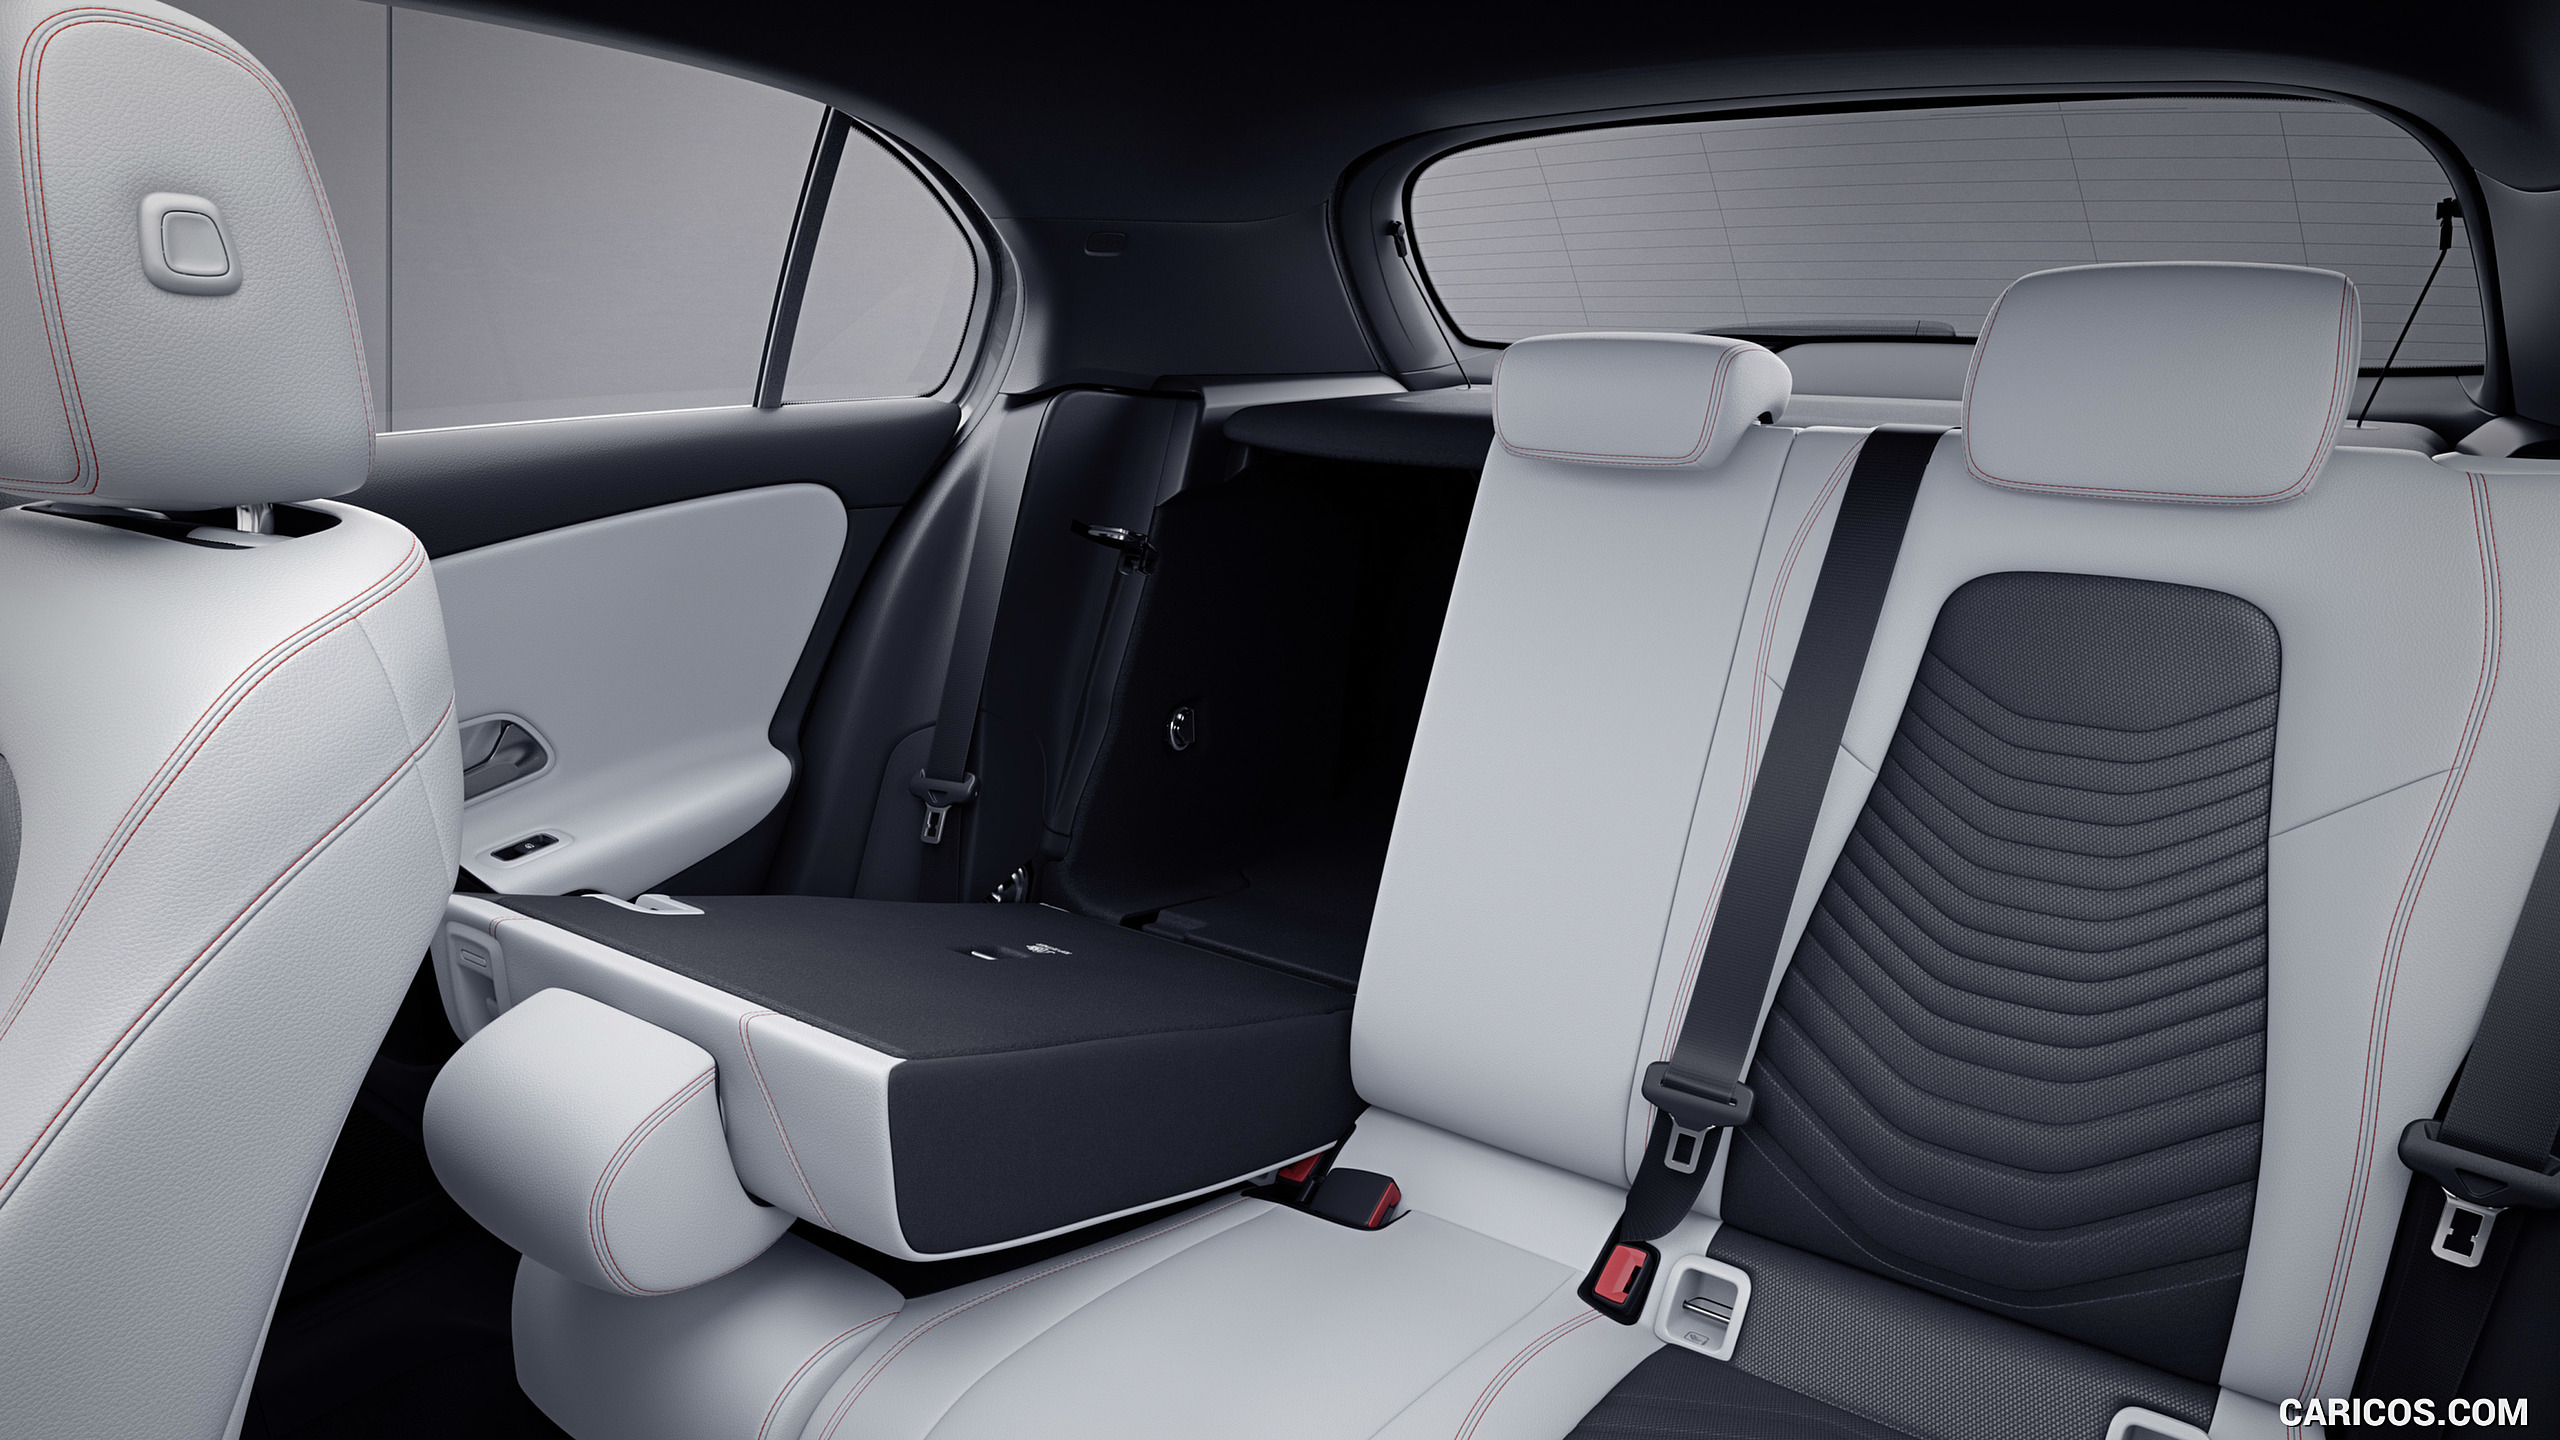 2019 Mercedes-Benz A-Class - Interior, Rear Seats, #177 of 181